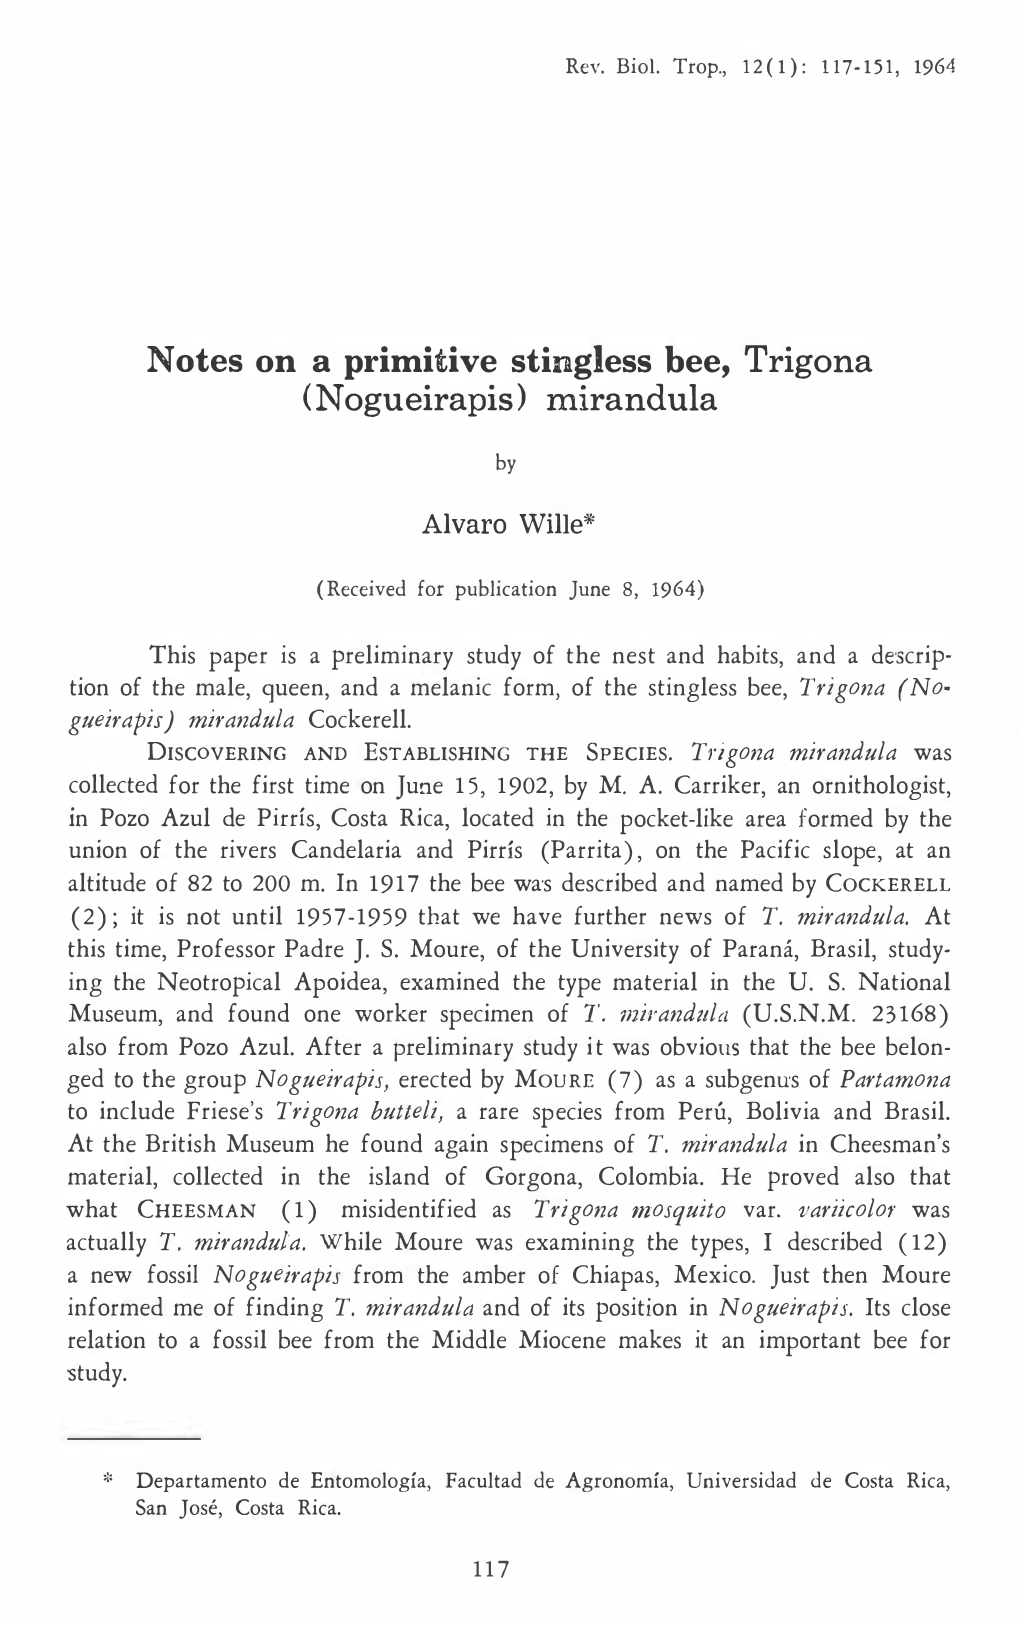 Notes on a Primitive Stingless Bee, Trigona (Nogueirapis) Mirandula